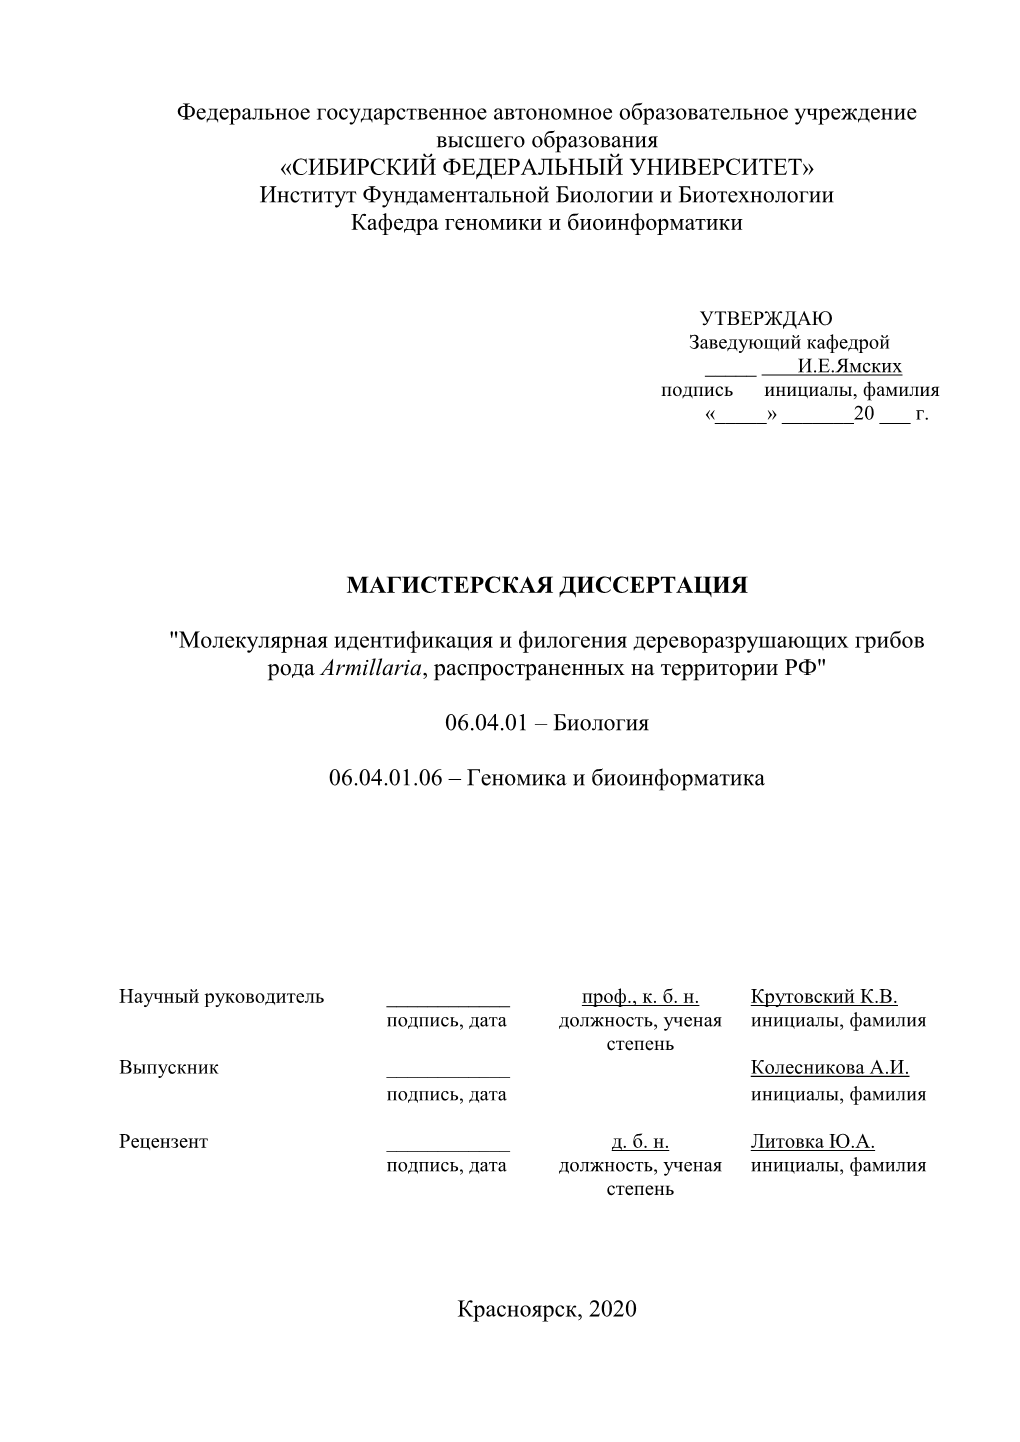 Magisterskaya Dissertaciya Kole